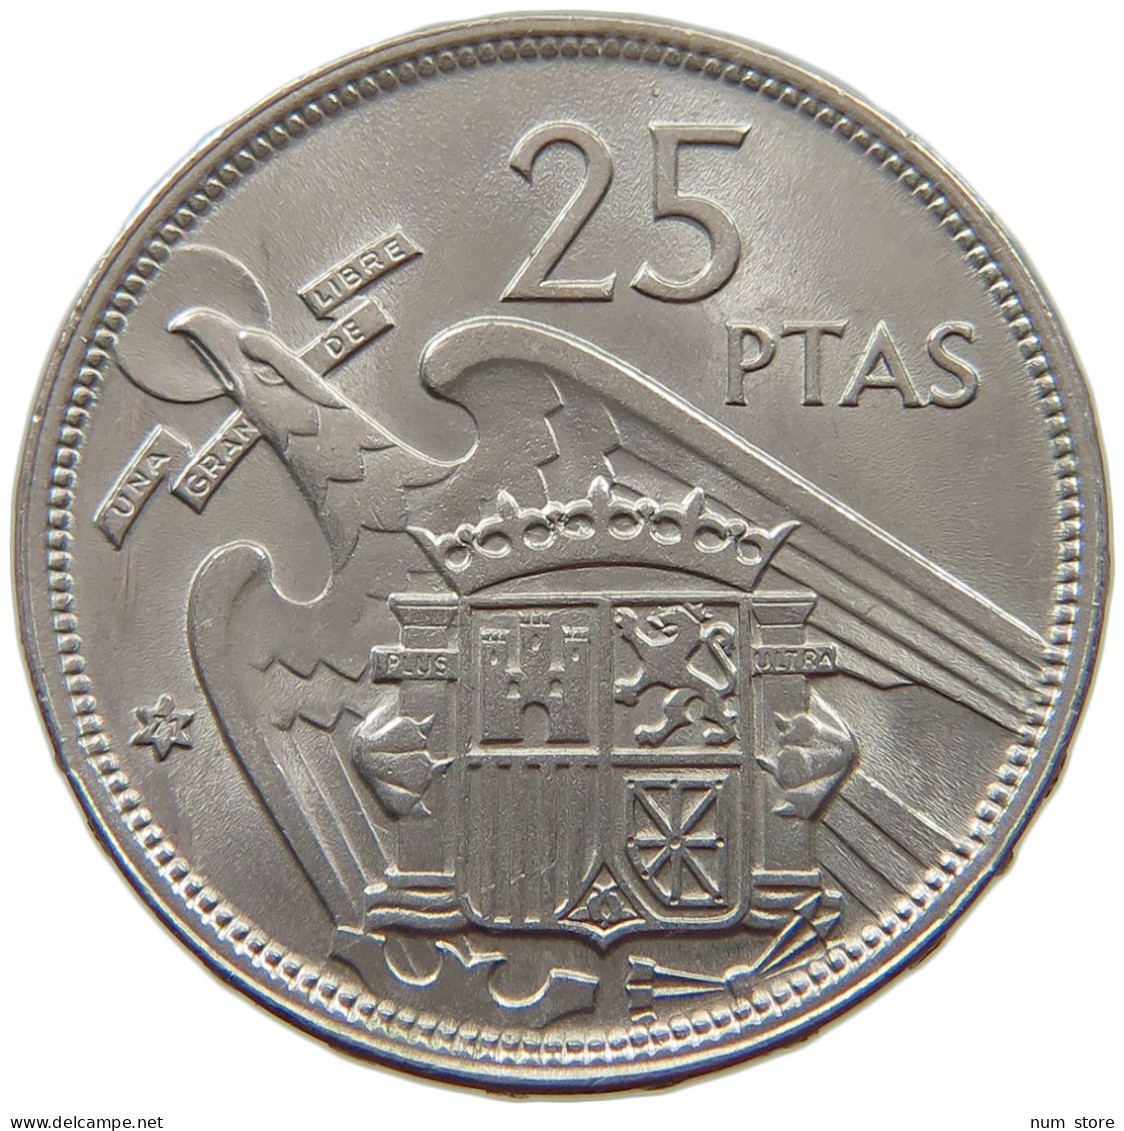 SPAIN 25 PESETAS 1957 71 Francisco Franco 1939-1975 #s065 0263 - 25 Pesetas